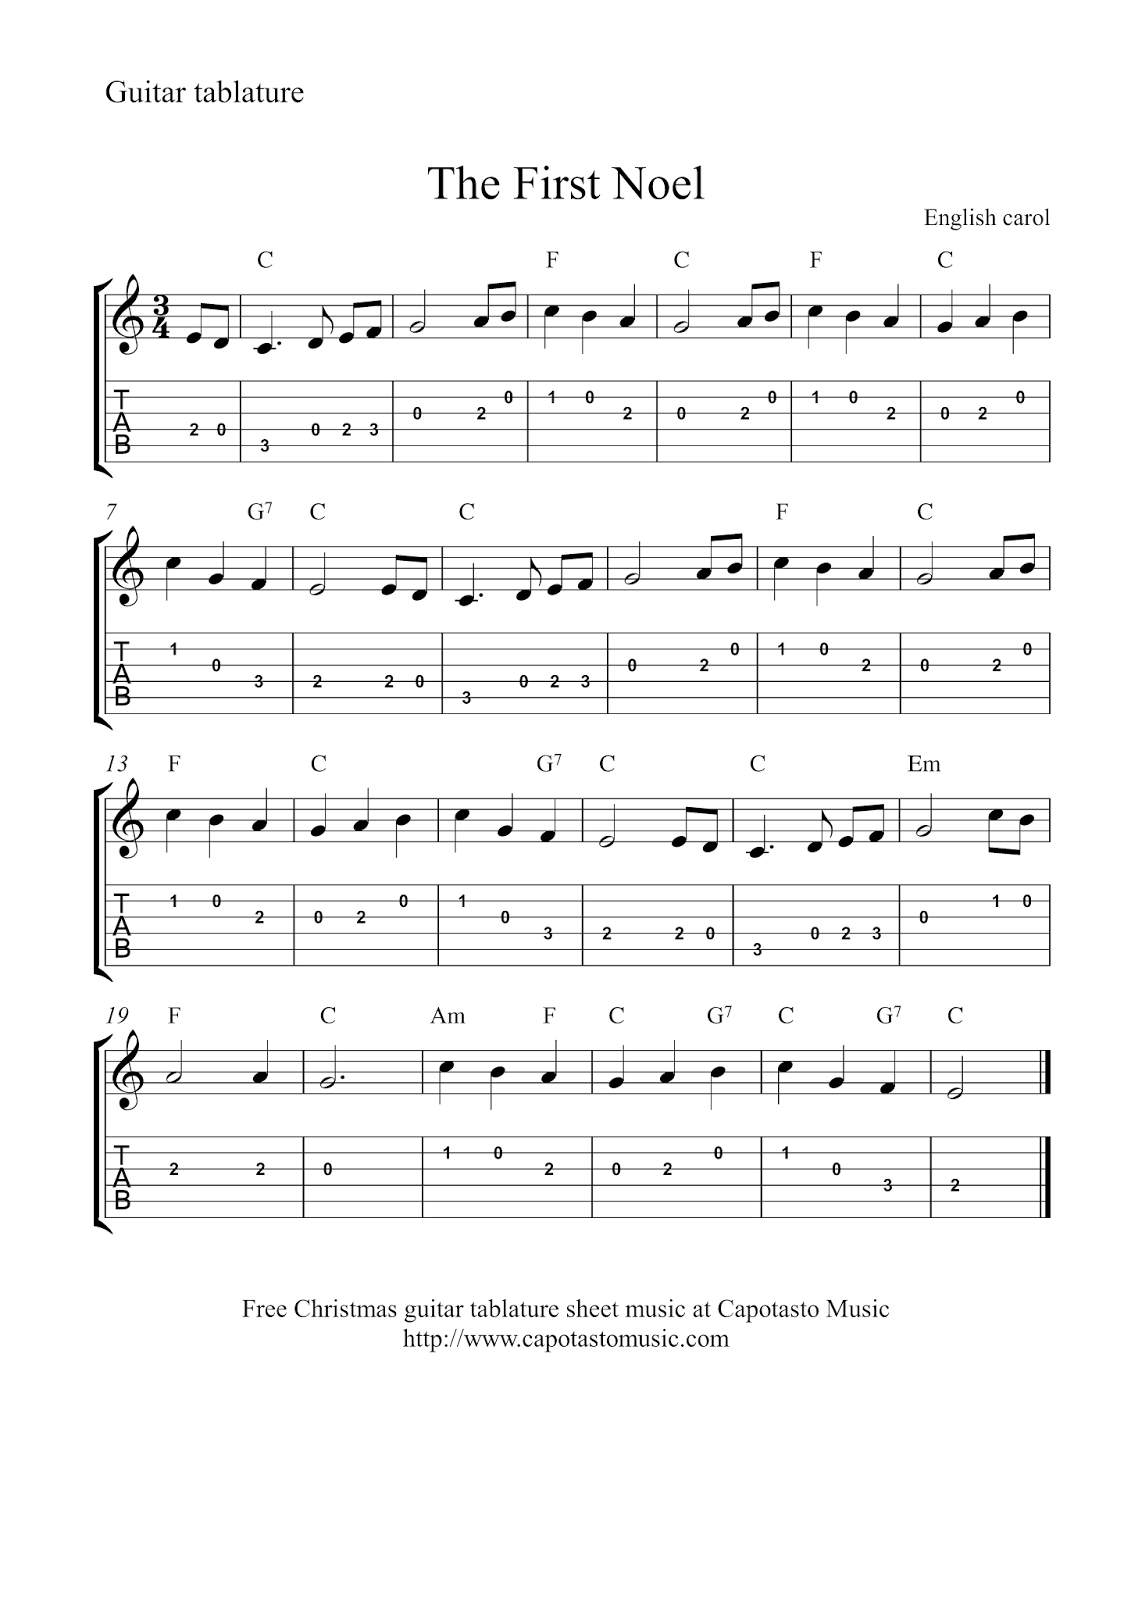 Free Christmas guitar tablature sheet music - The First Noel